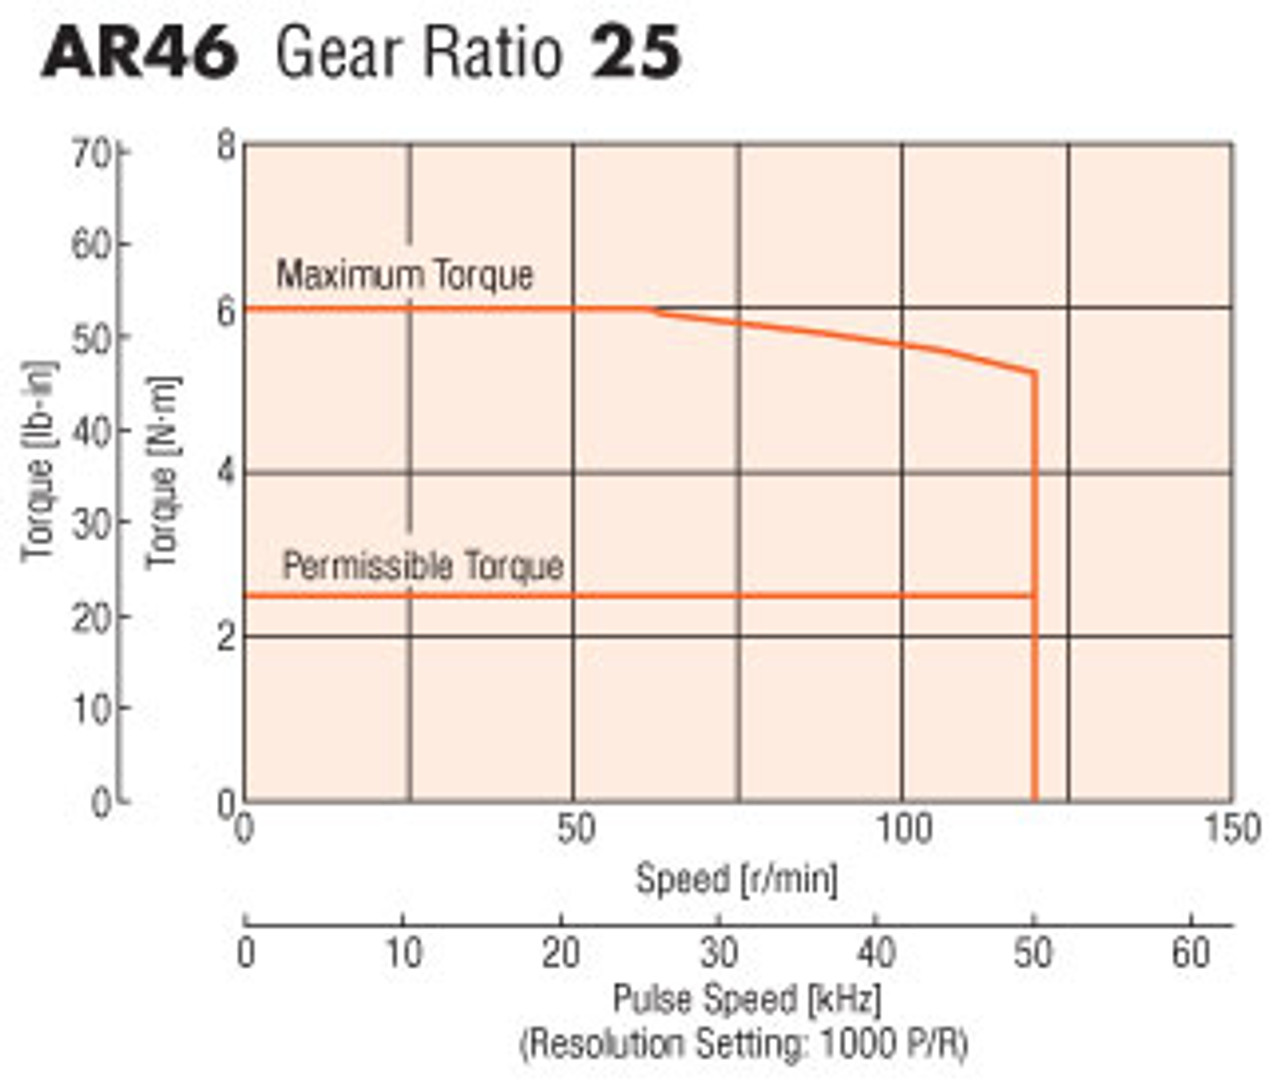 ARM46MC-PS25 - Speed-Torque